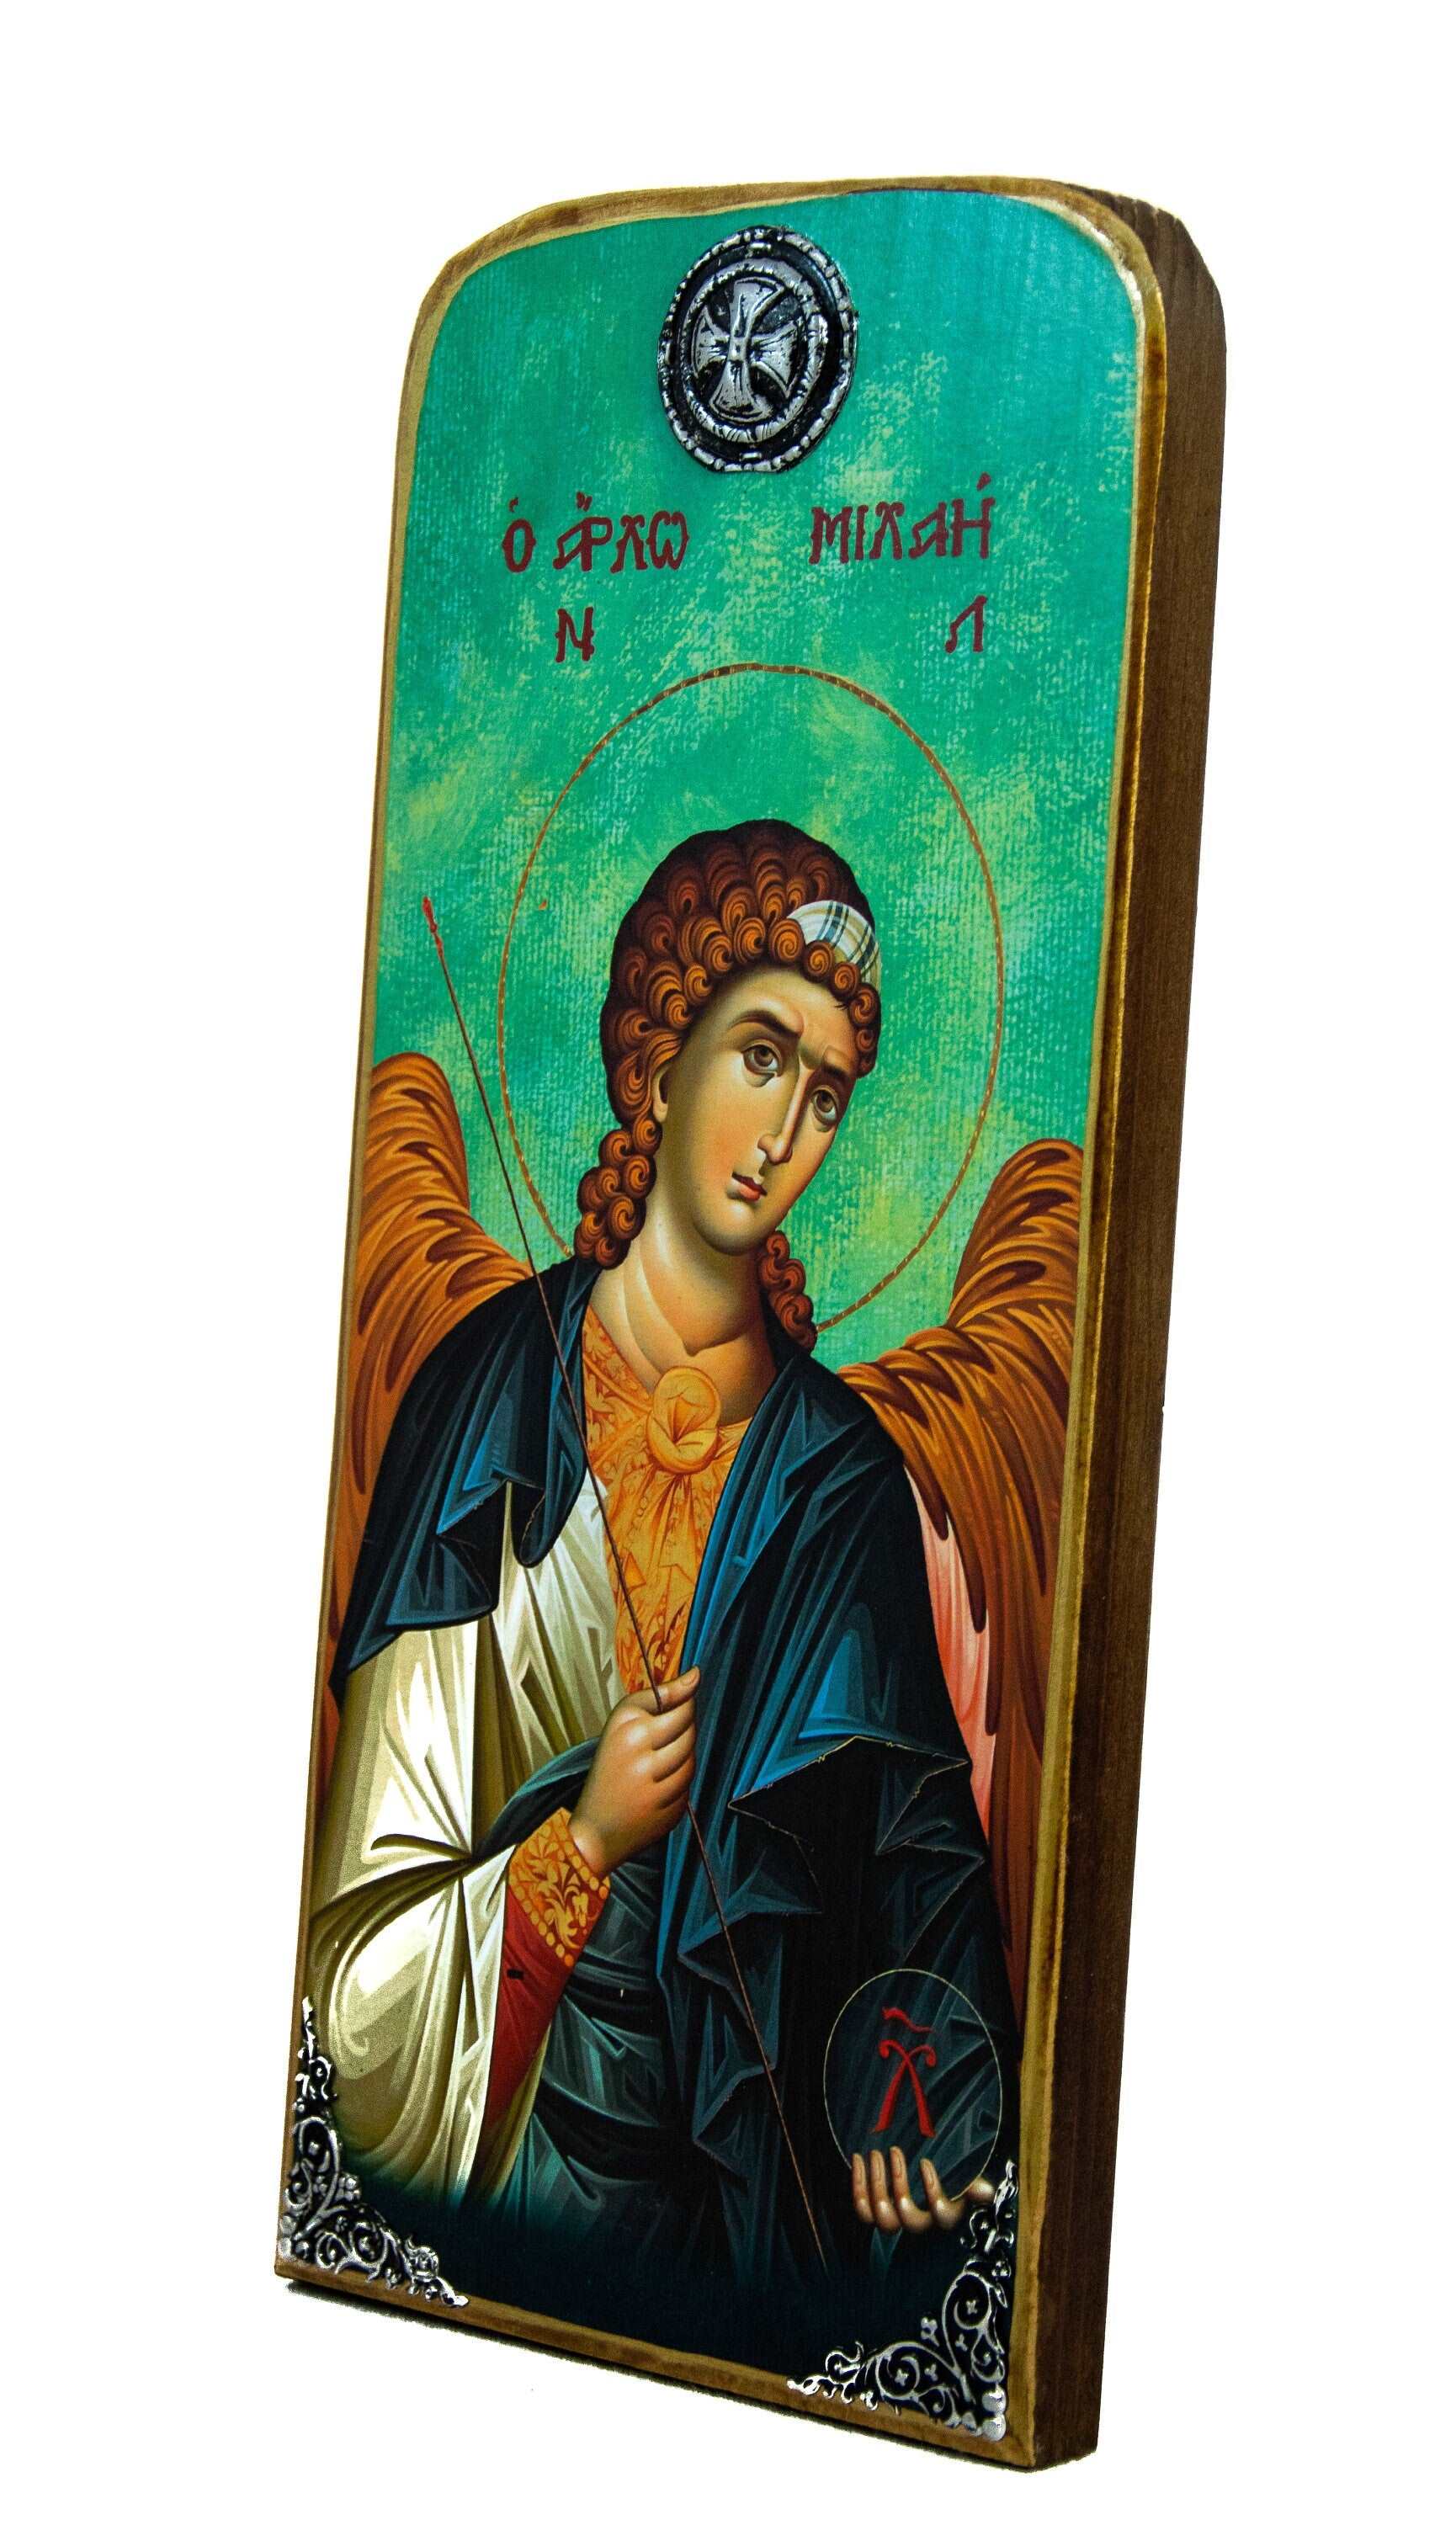 Archangel Michael icon, Handmade Greek Orthodox icon of St Michael, Byzantine art wall hanging on wood plaque, religious decor TheHolyArt